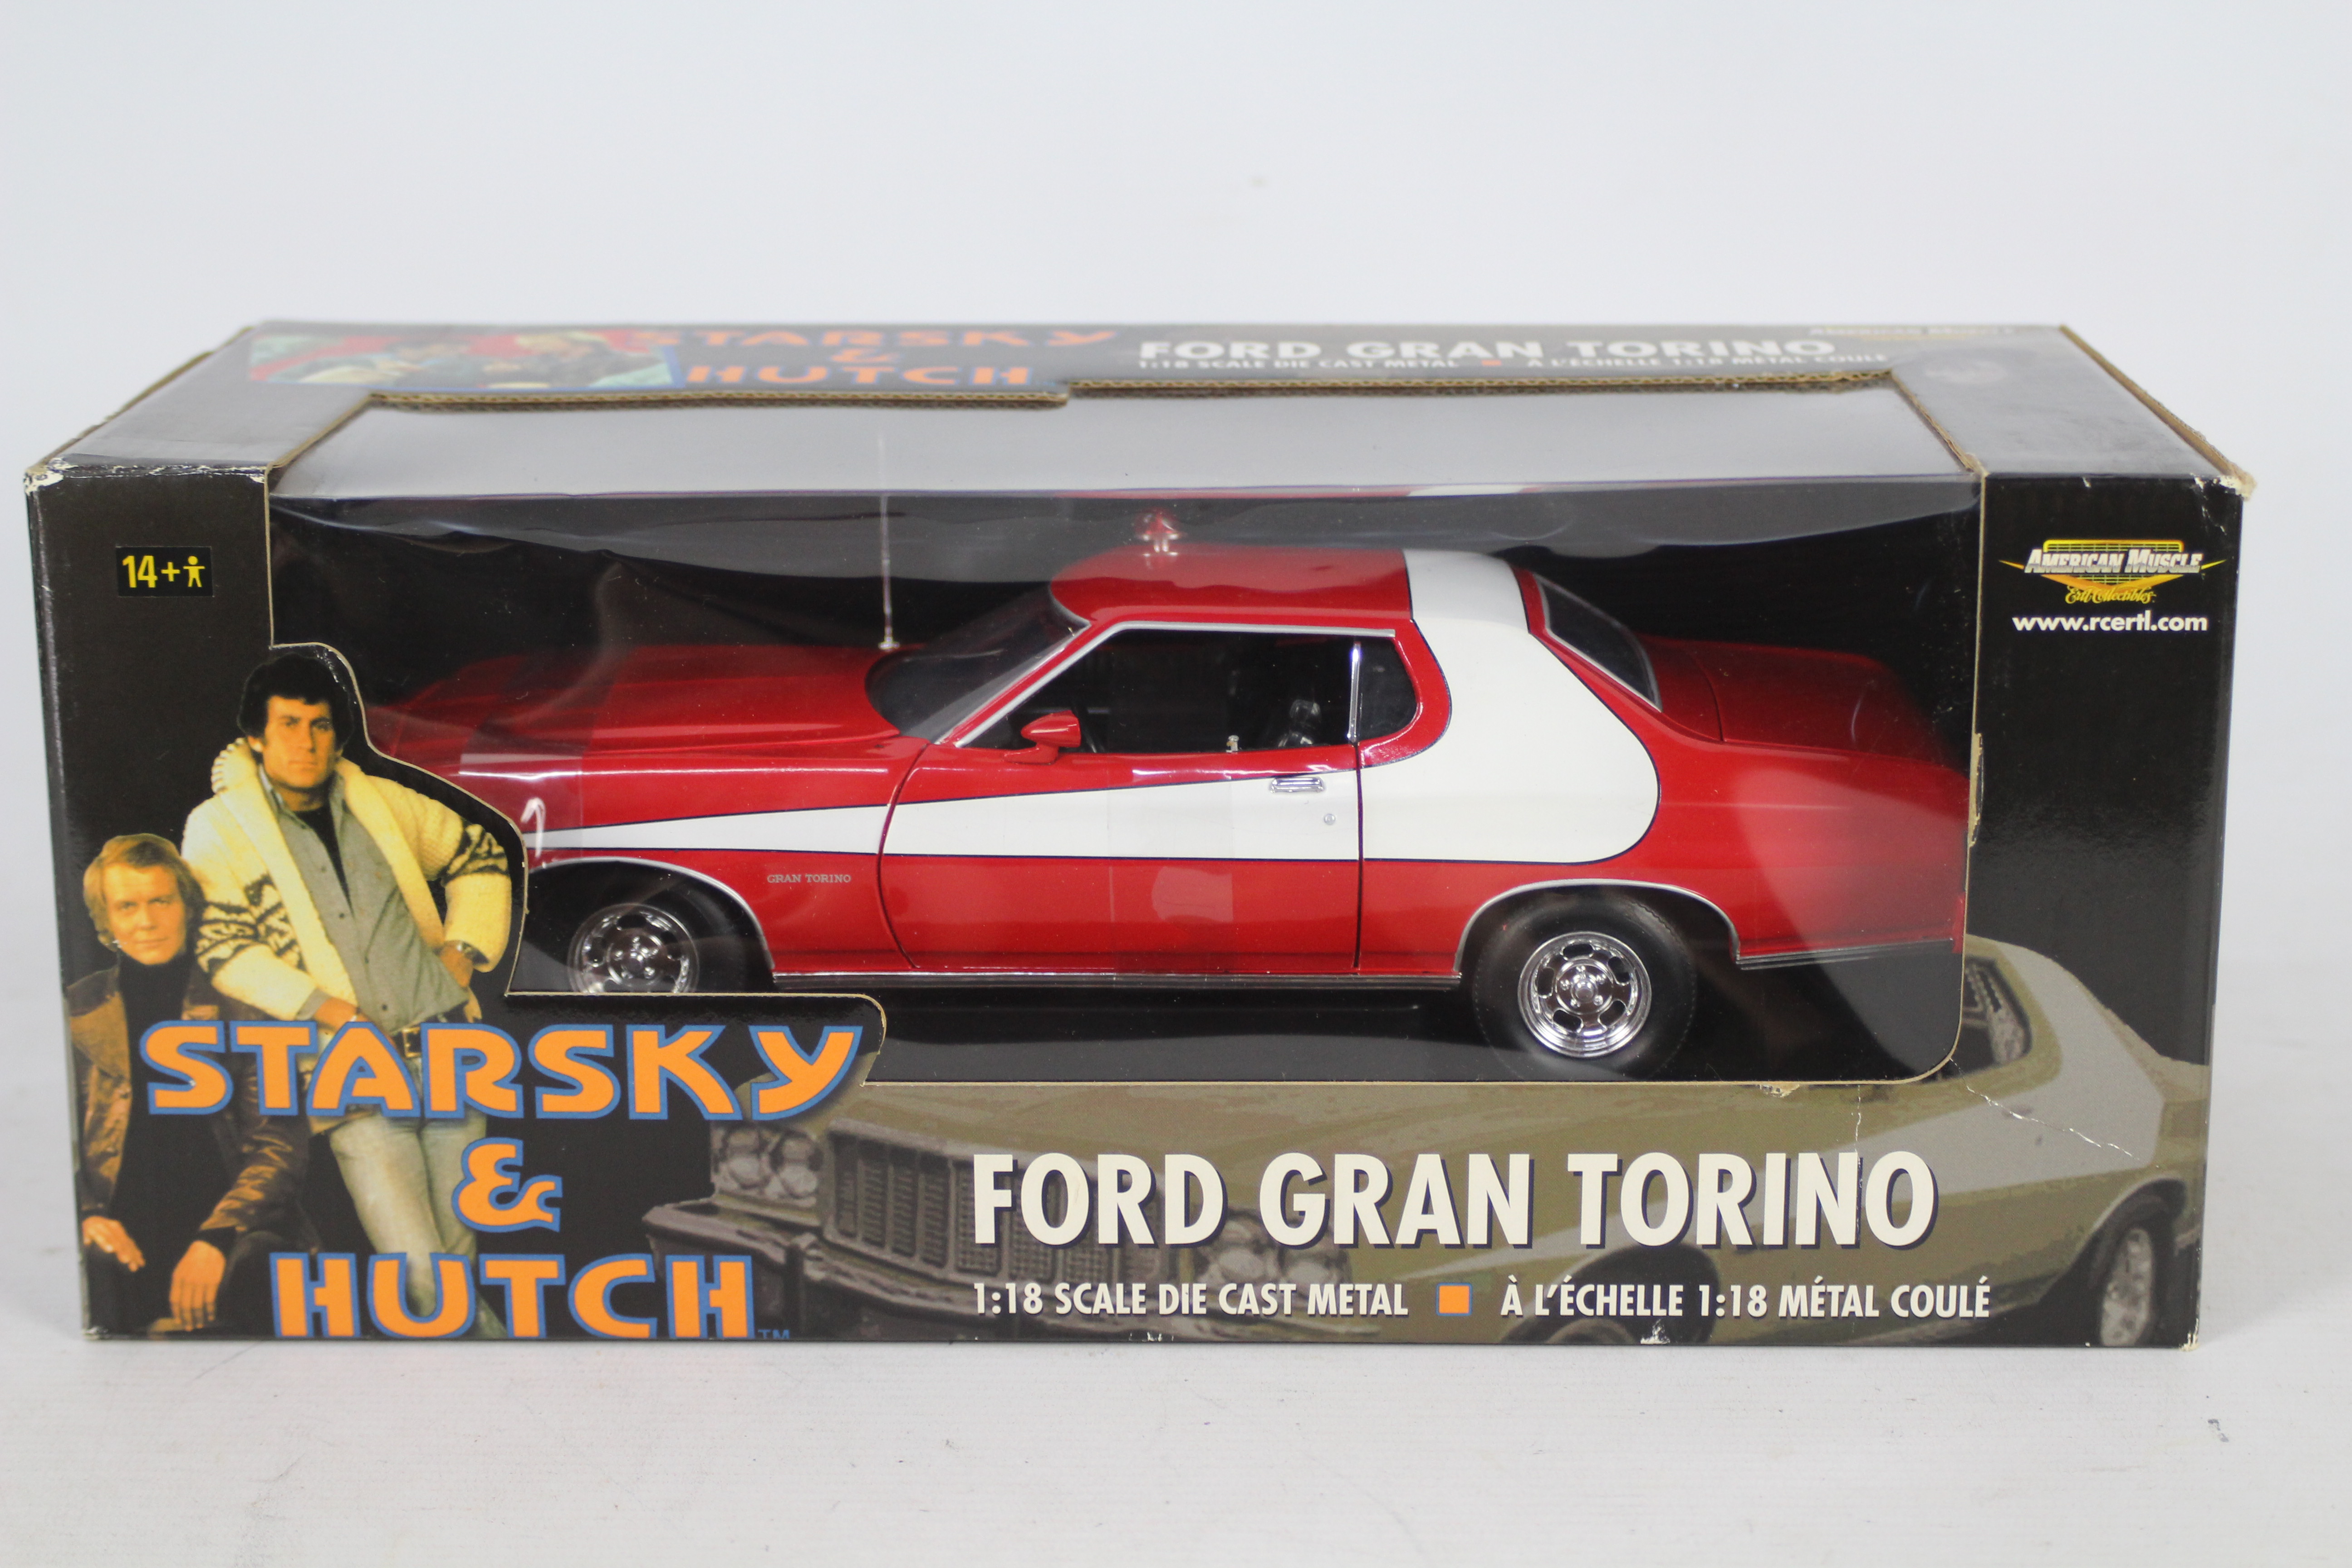 Ertl - American Muscle - A boxed 1:18 scale Starsky & Hutch Ford Gran Torino # 331519.